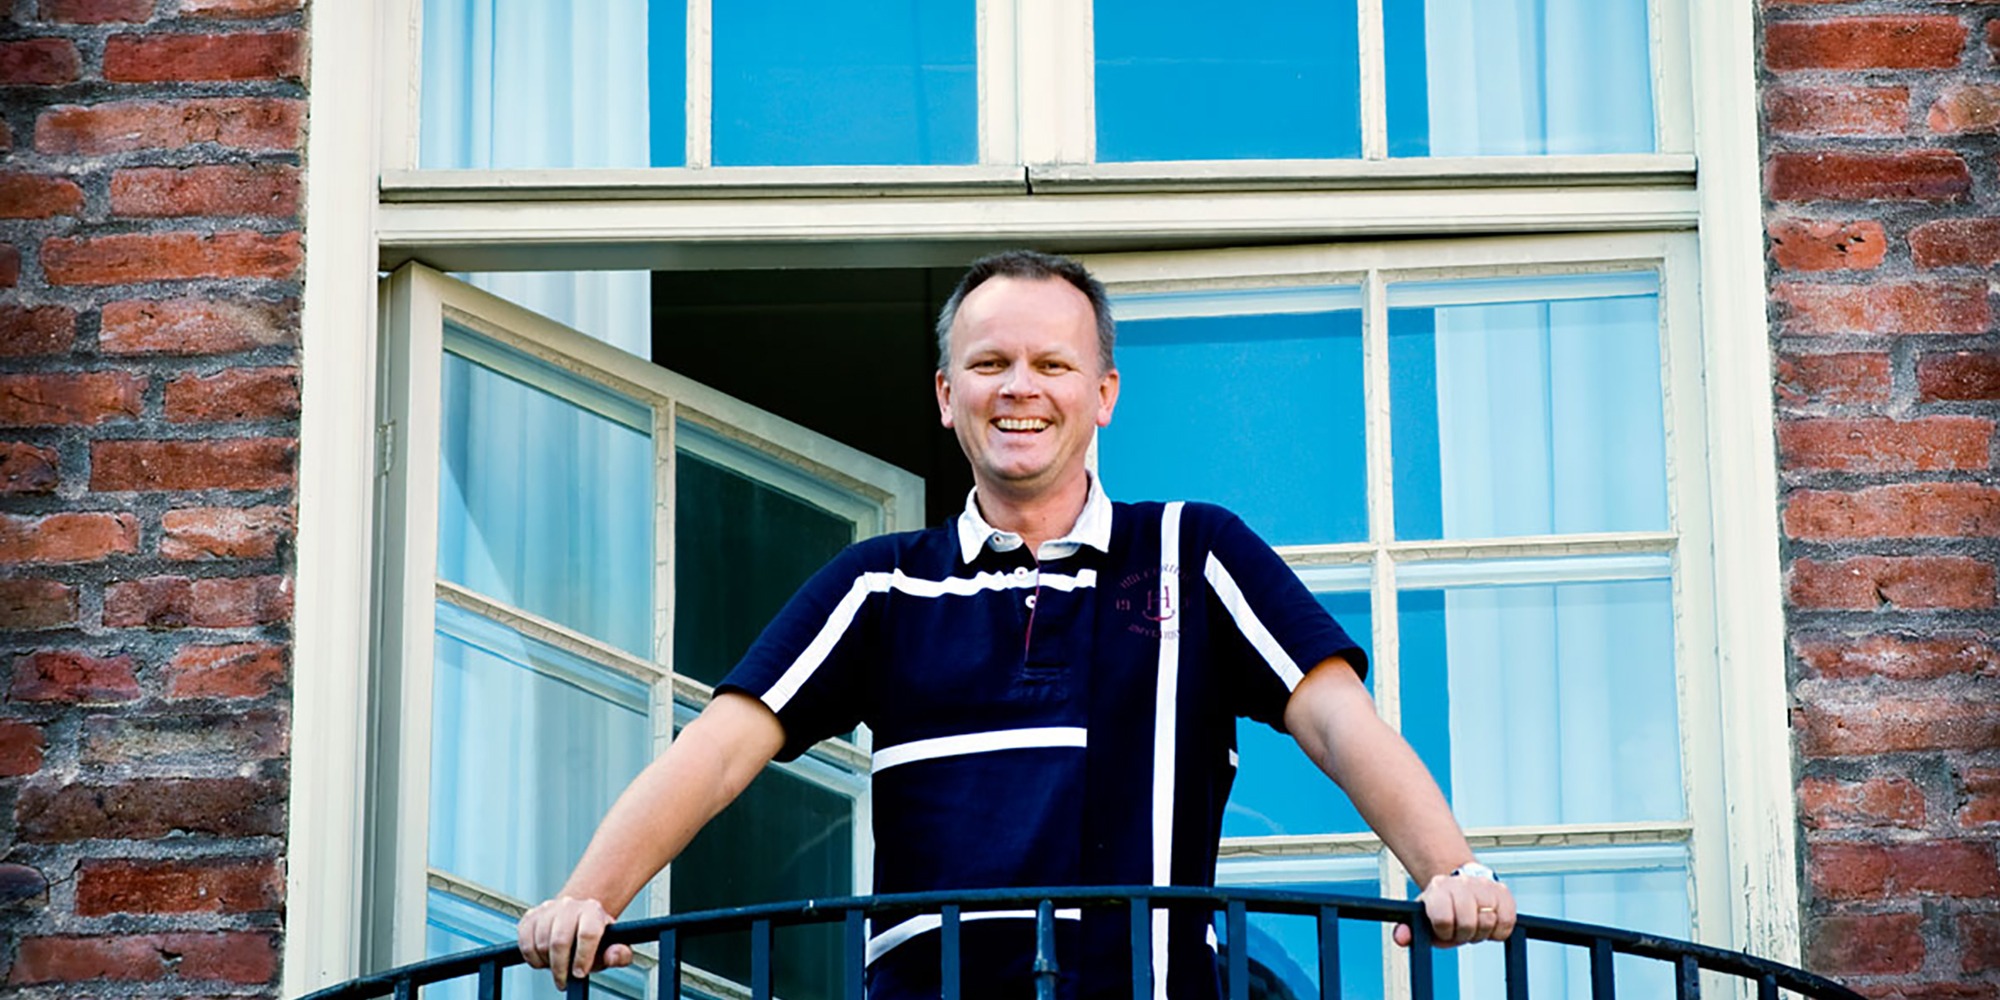 Porträtt av Jan Gulliksen ståendes på en balkong.